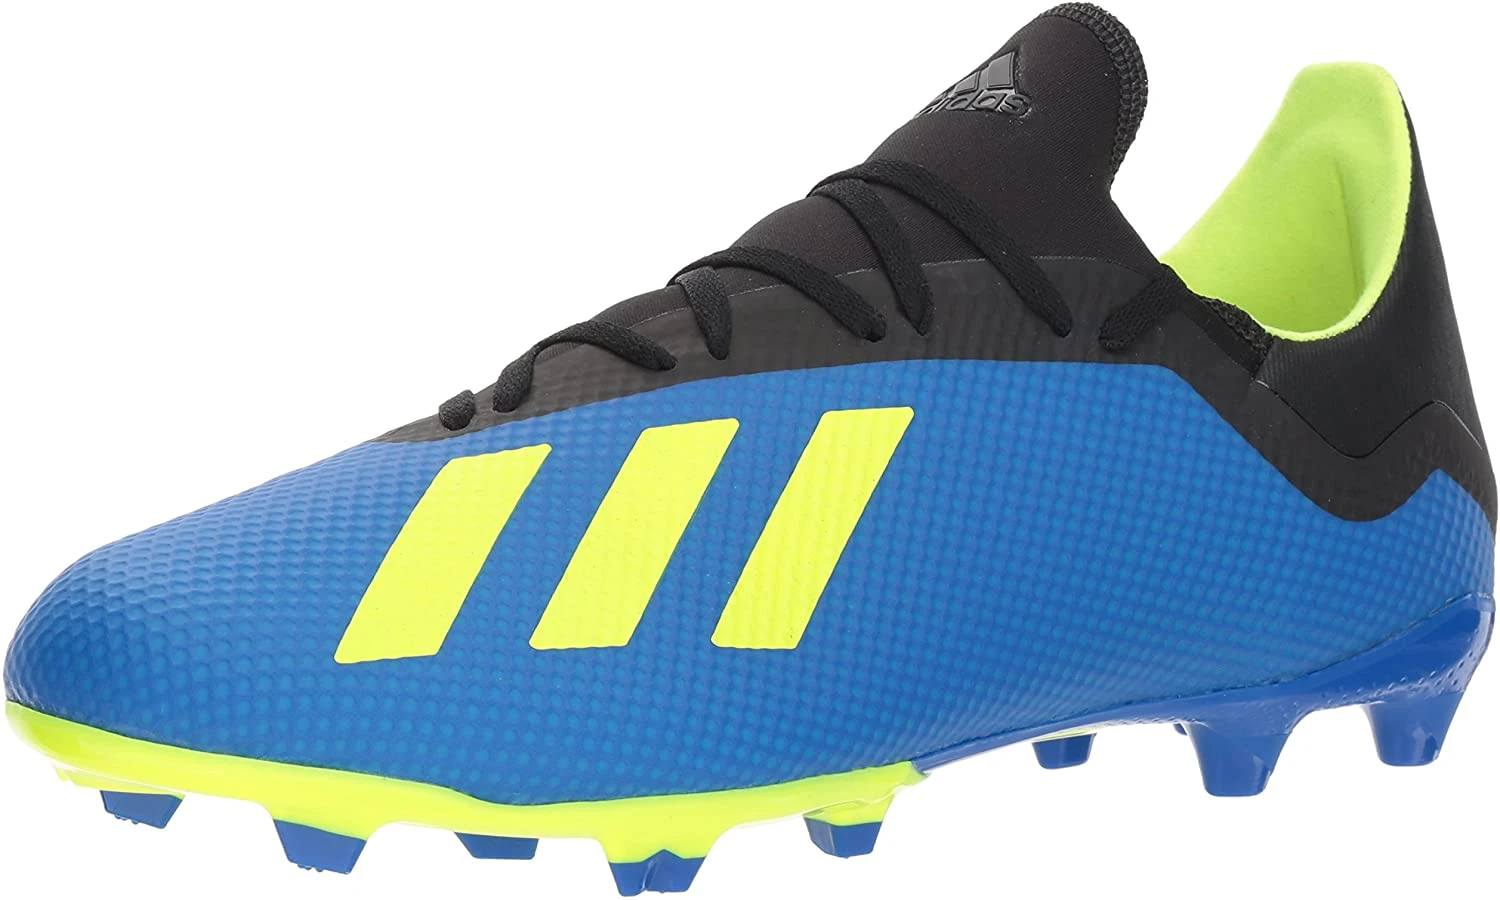 推荐Men's X 18.3 Firm Ground Soccer Shoe商品